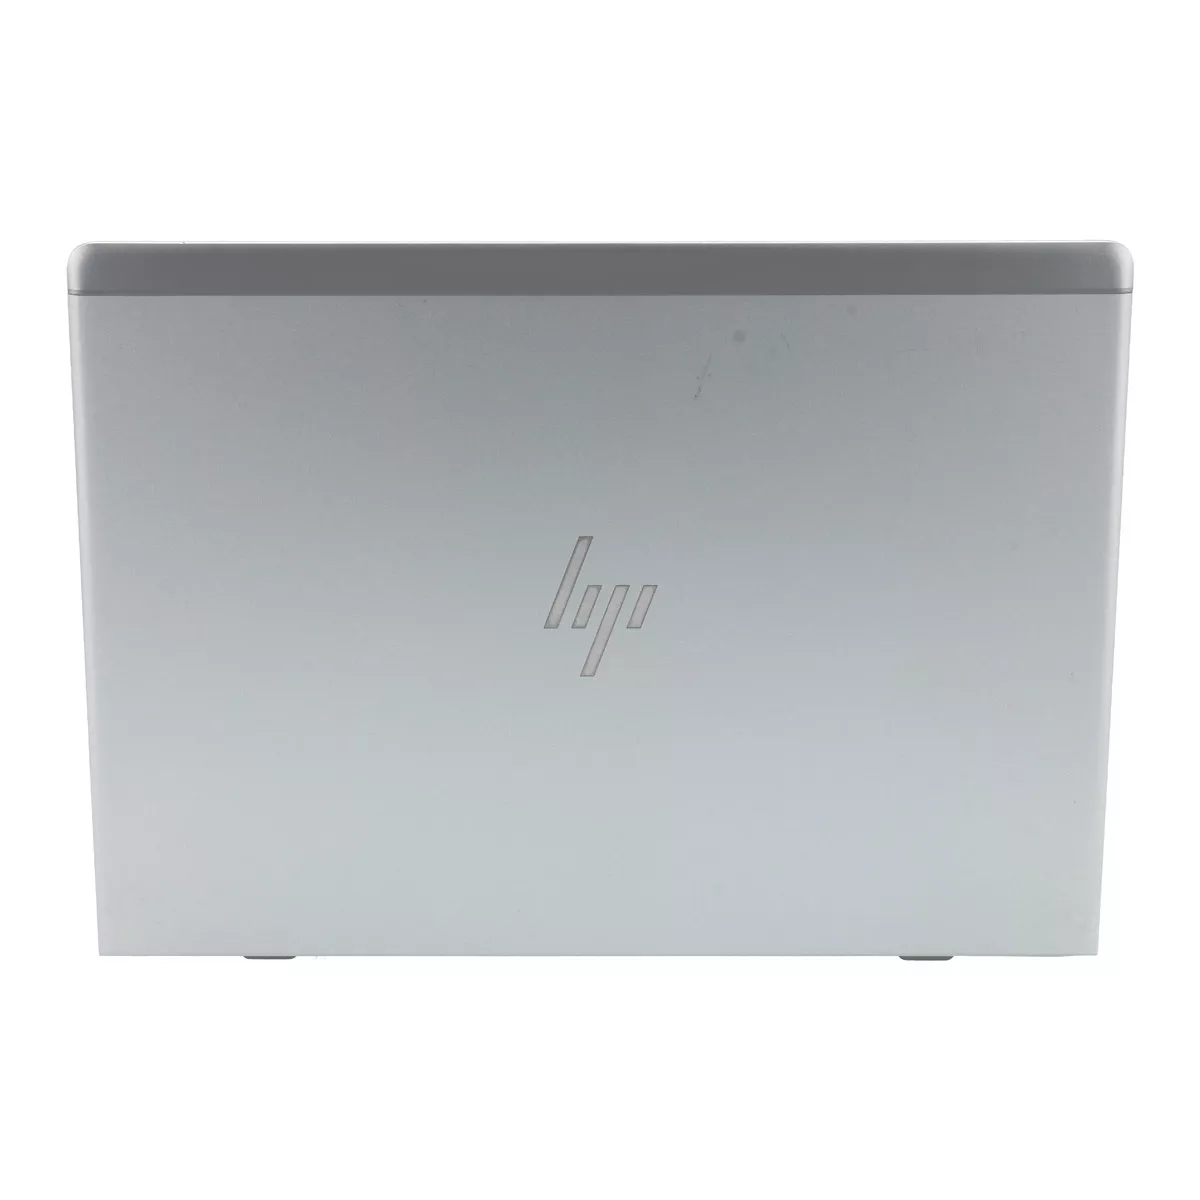 HP EliteBook 830 G5 Core i5 8250U Full-HD 8 GB DDR4 240 GB M.2 SSD Webcam A+